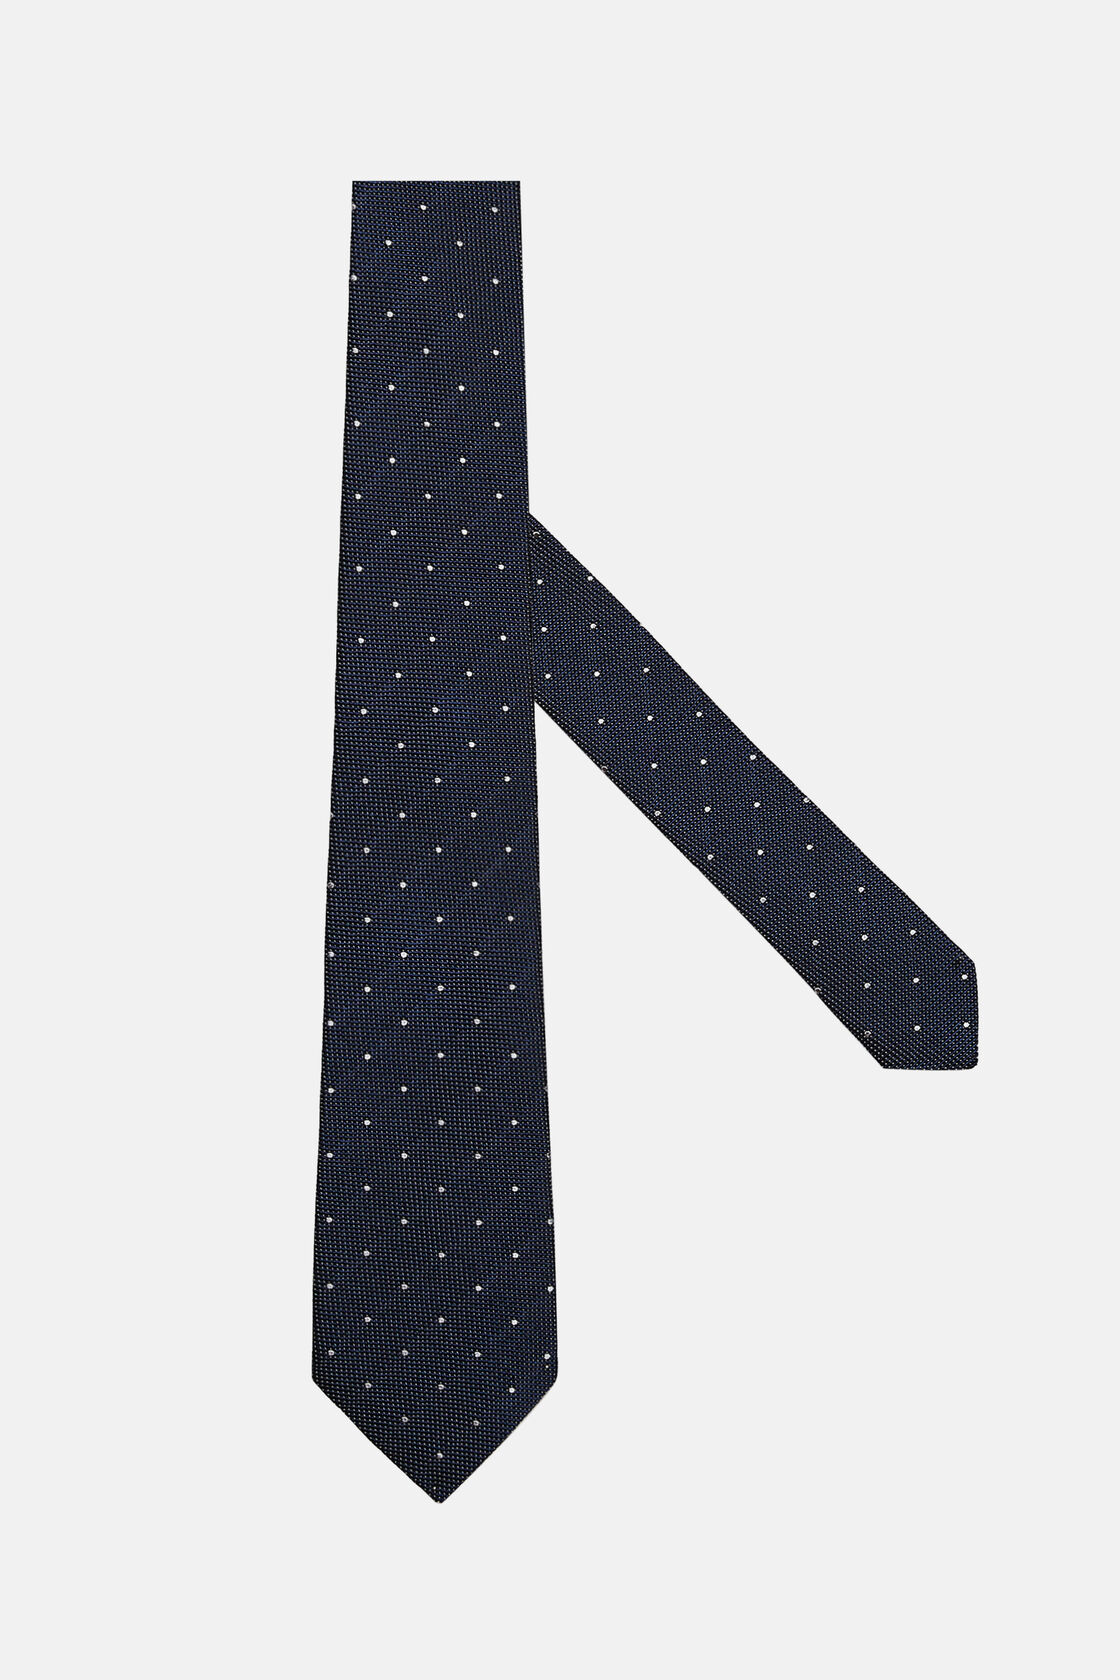 Jedwabny krawat w kropki, Navy blue, hi-res